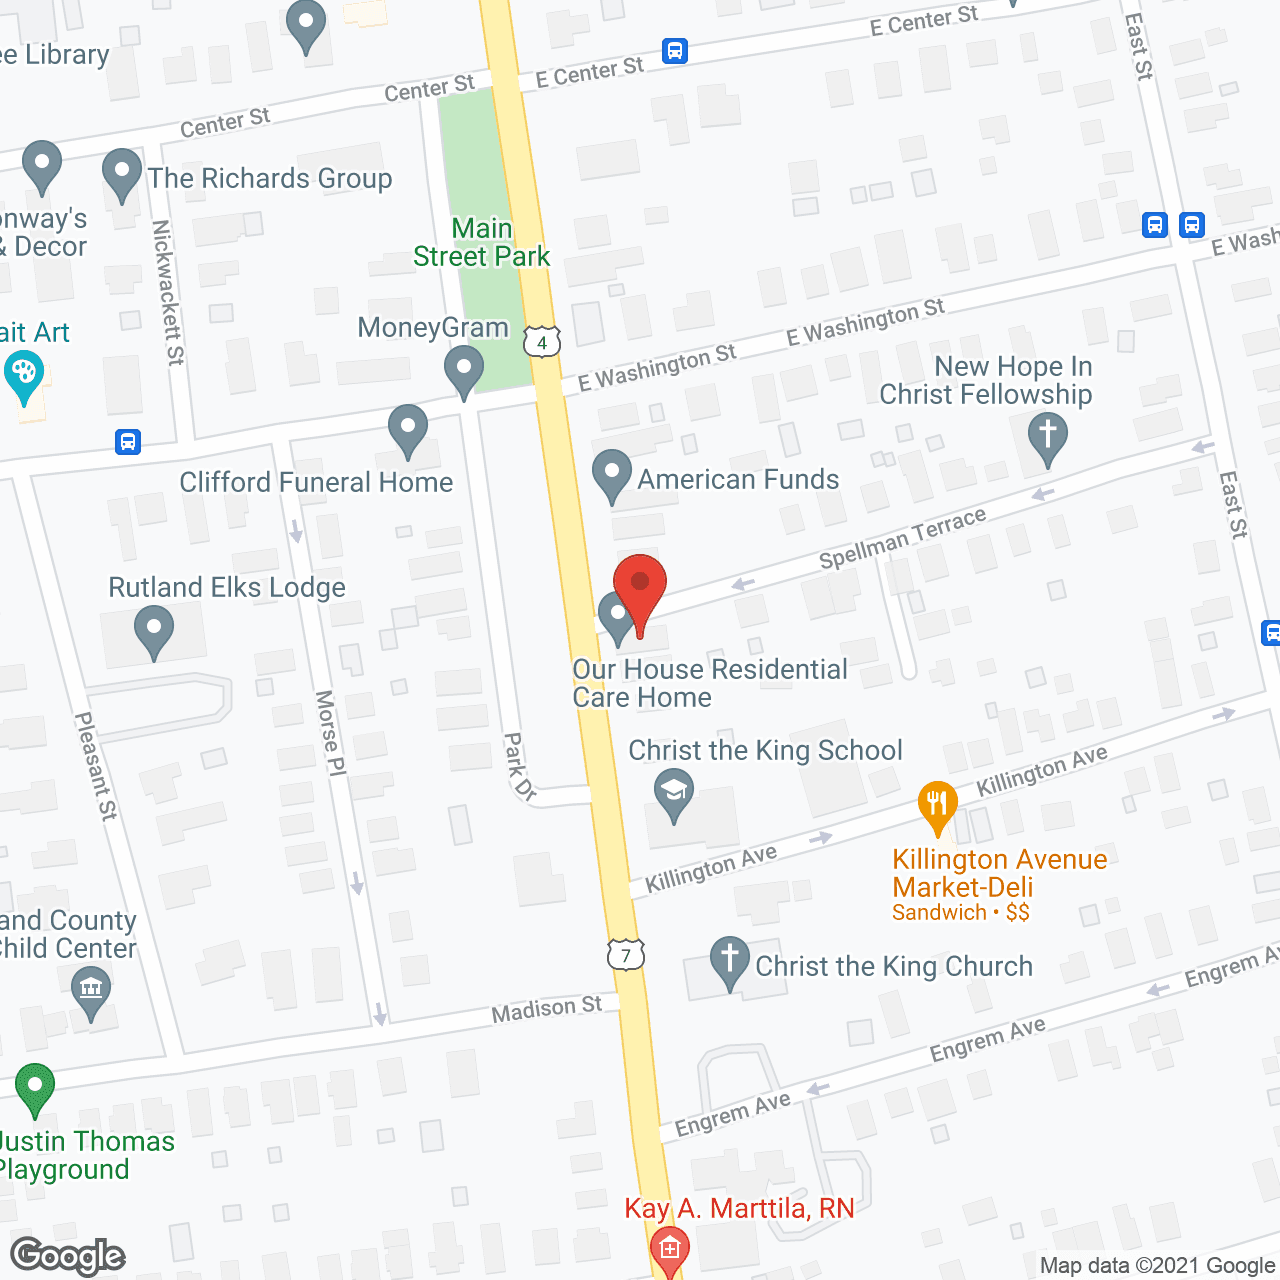 Park Terrace in google map